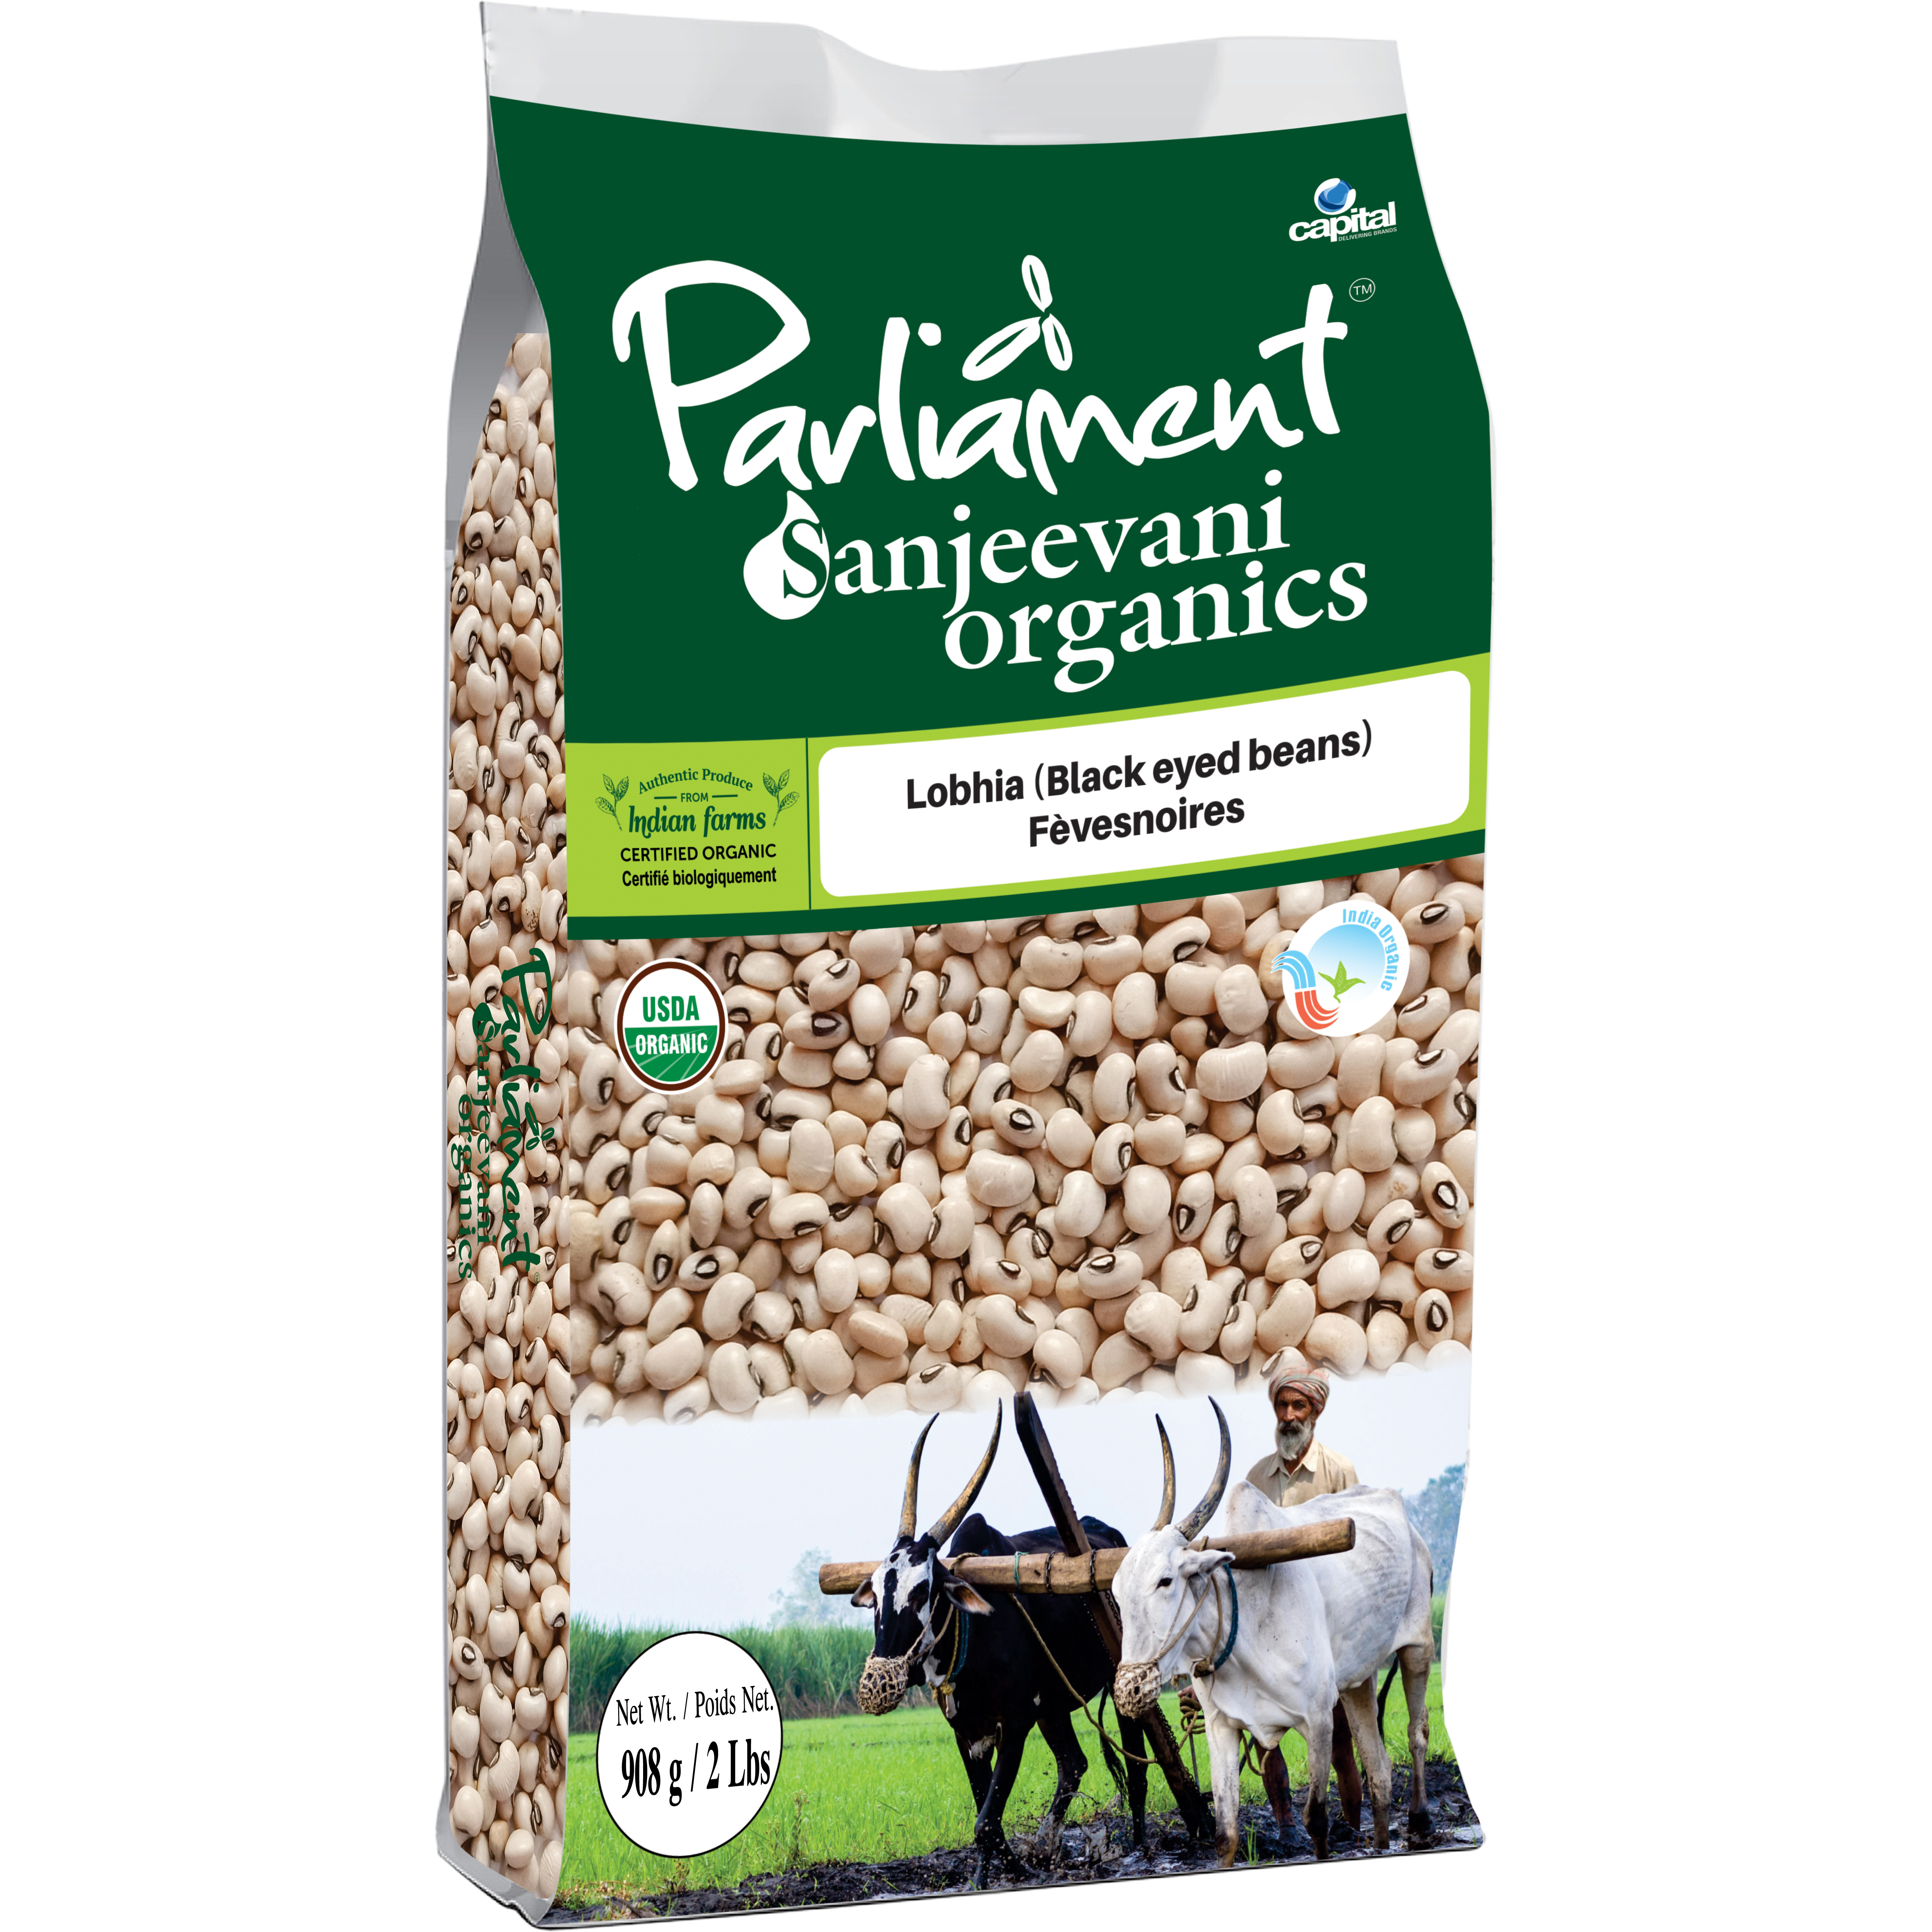 Parliament Sanjeevani Organic Blackeyed Beans - 2 Lb (907 Gm)